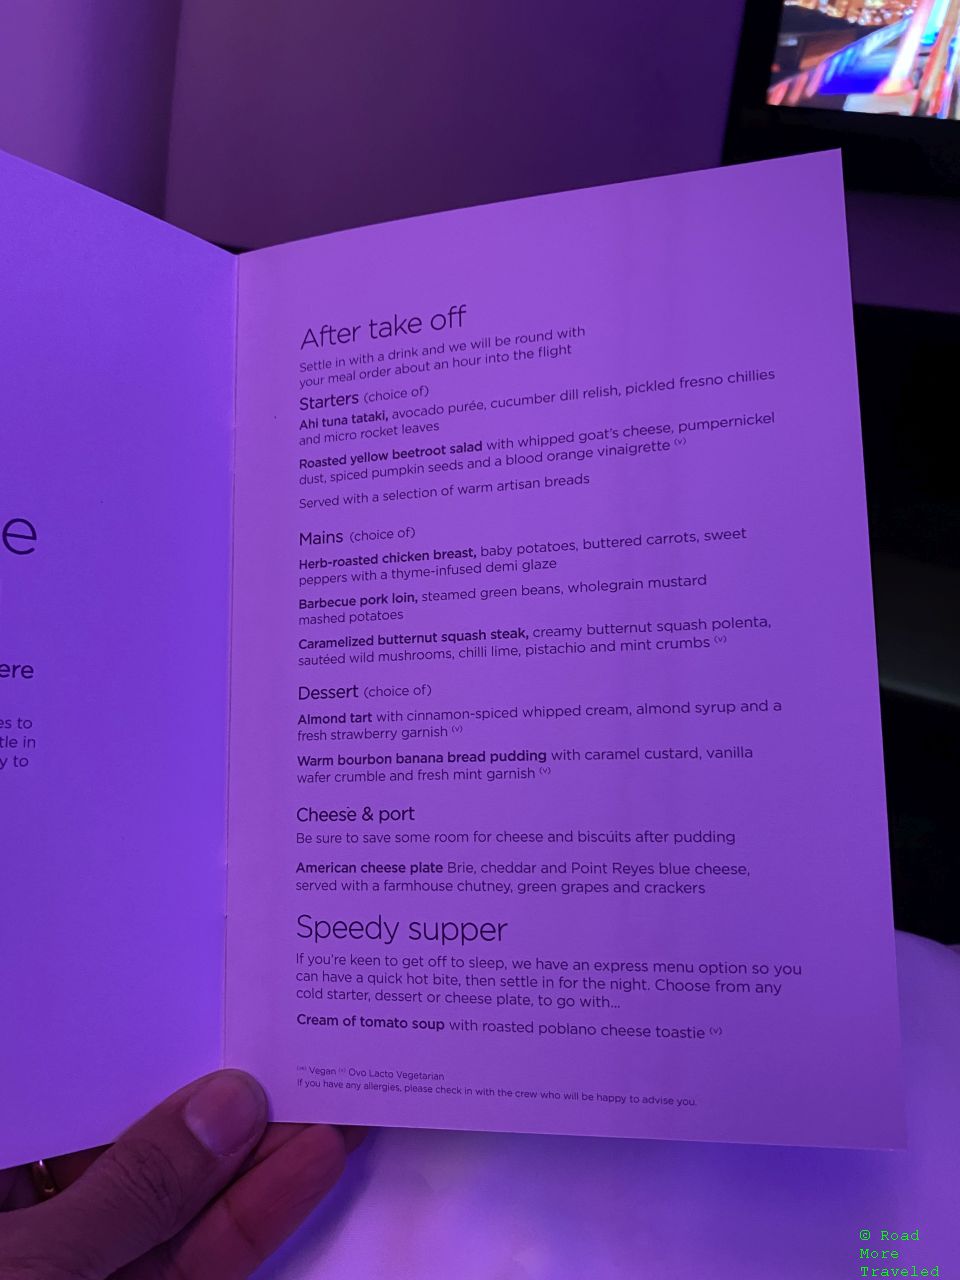 Virgin Atlantic Upper Class dinner menu